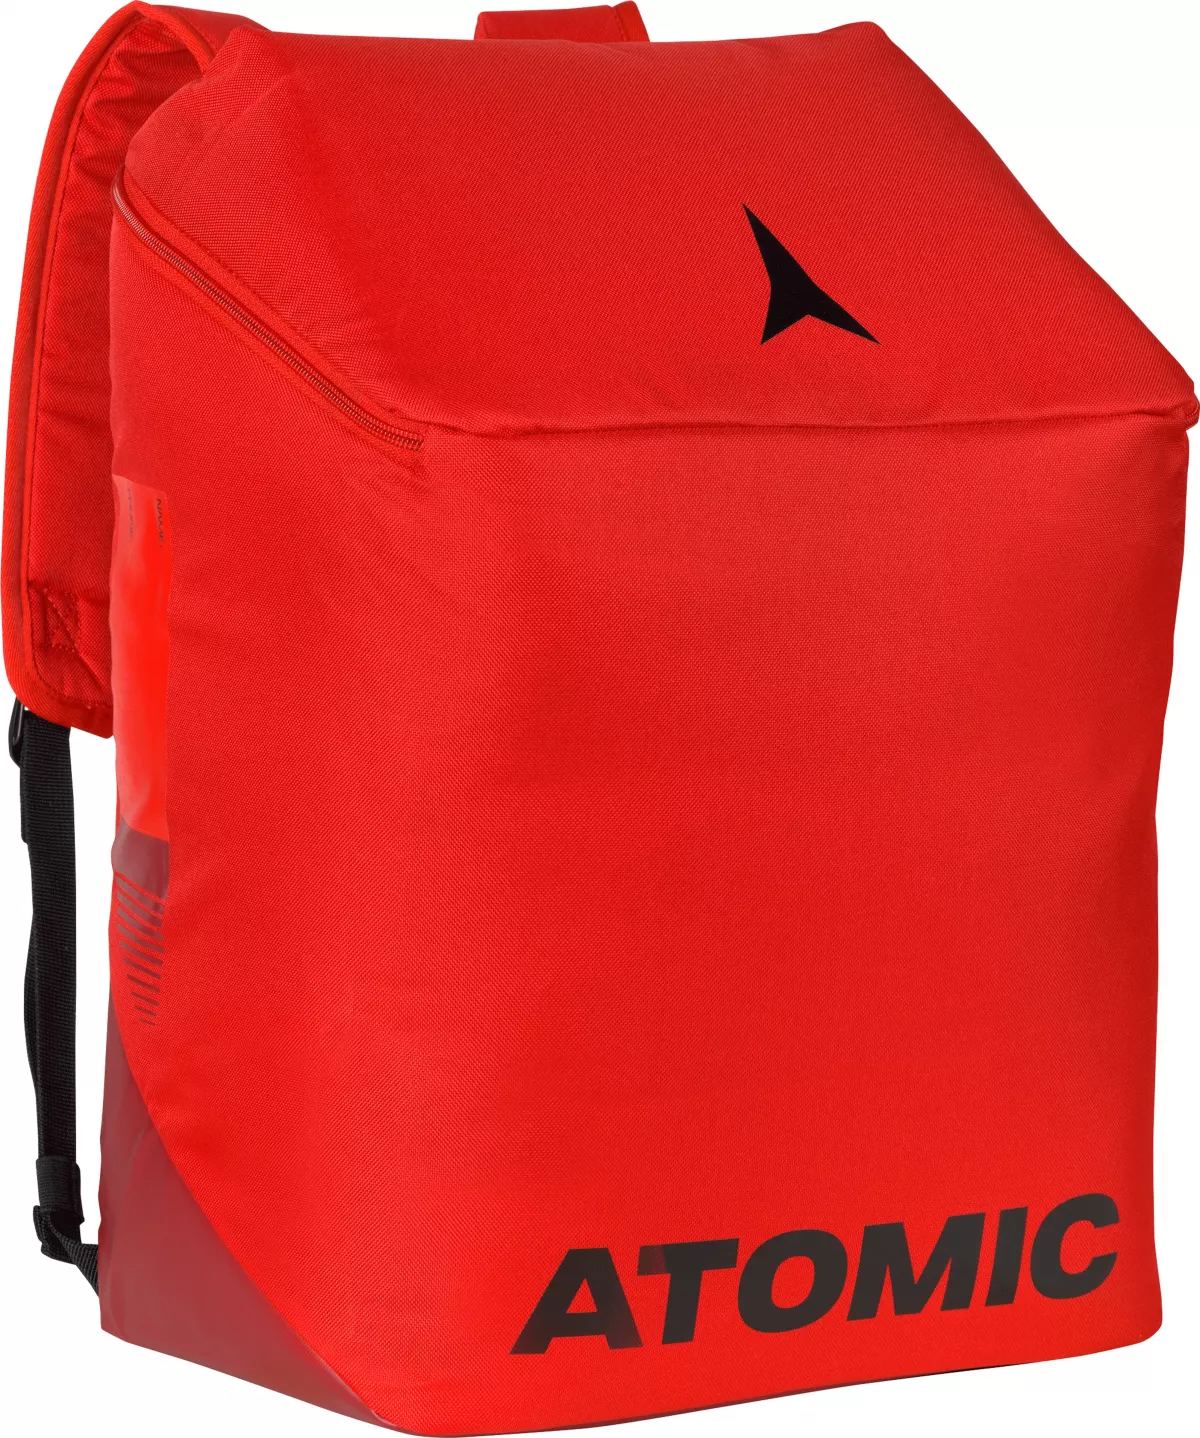 Atomic Boot & Helmet PACK Rio Red sícipőtáska